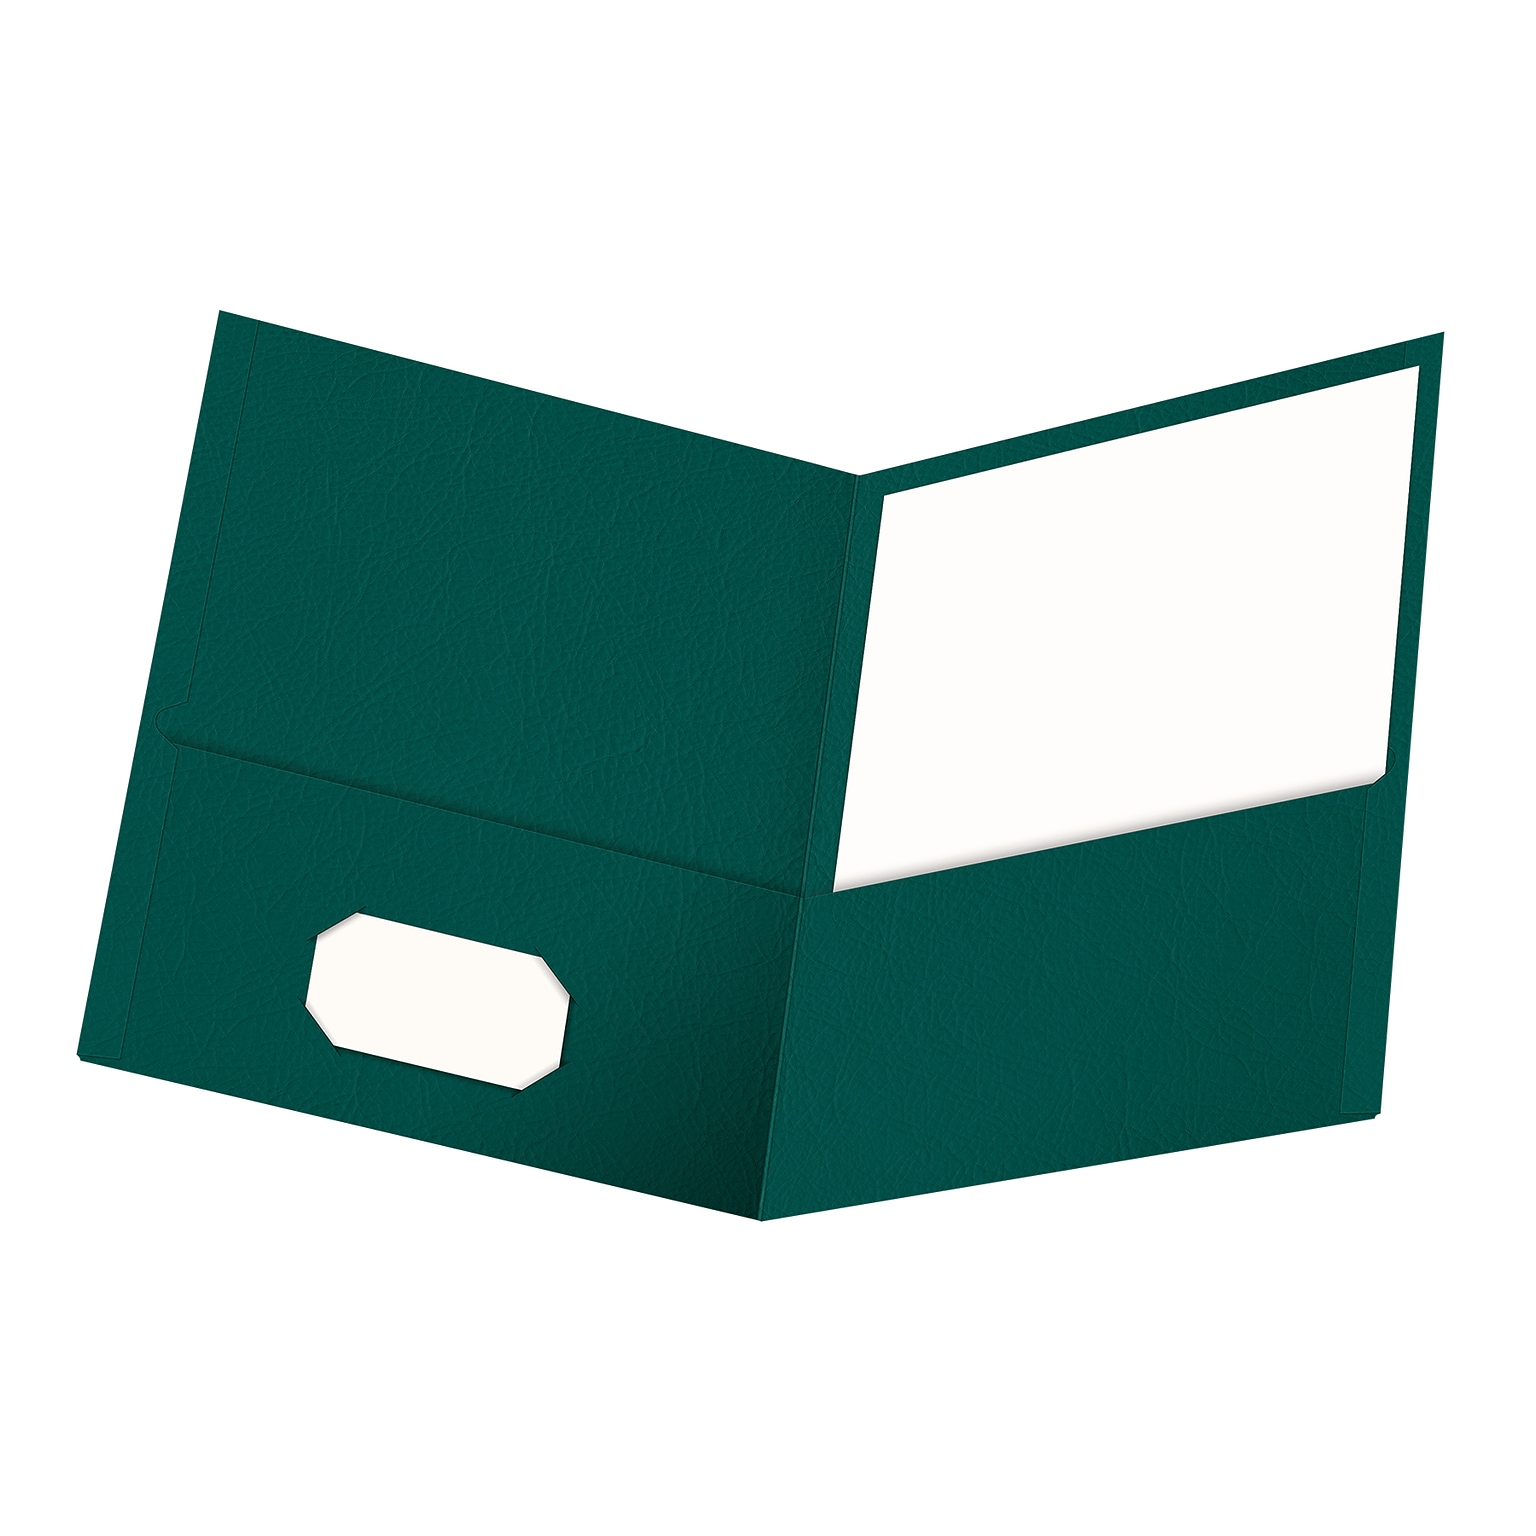 Oxford Twin Portfolio Folders, Teal, 25/Box (OXF 57555)